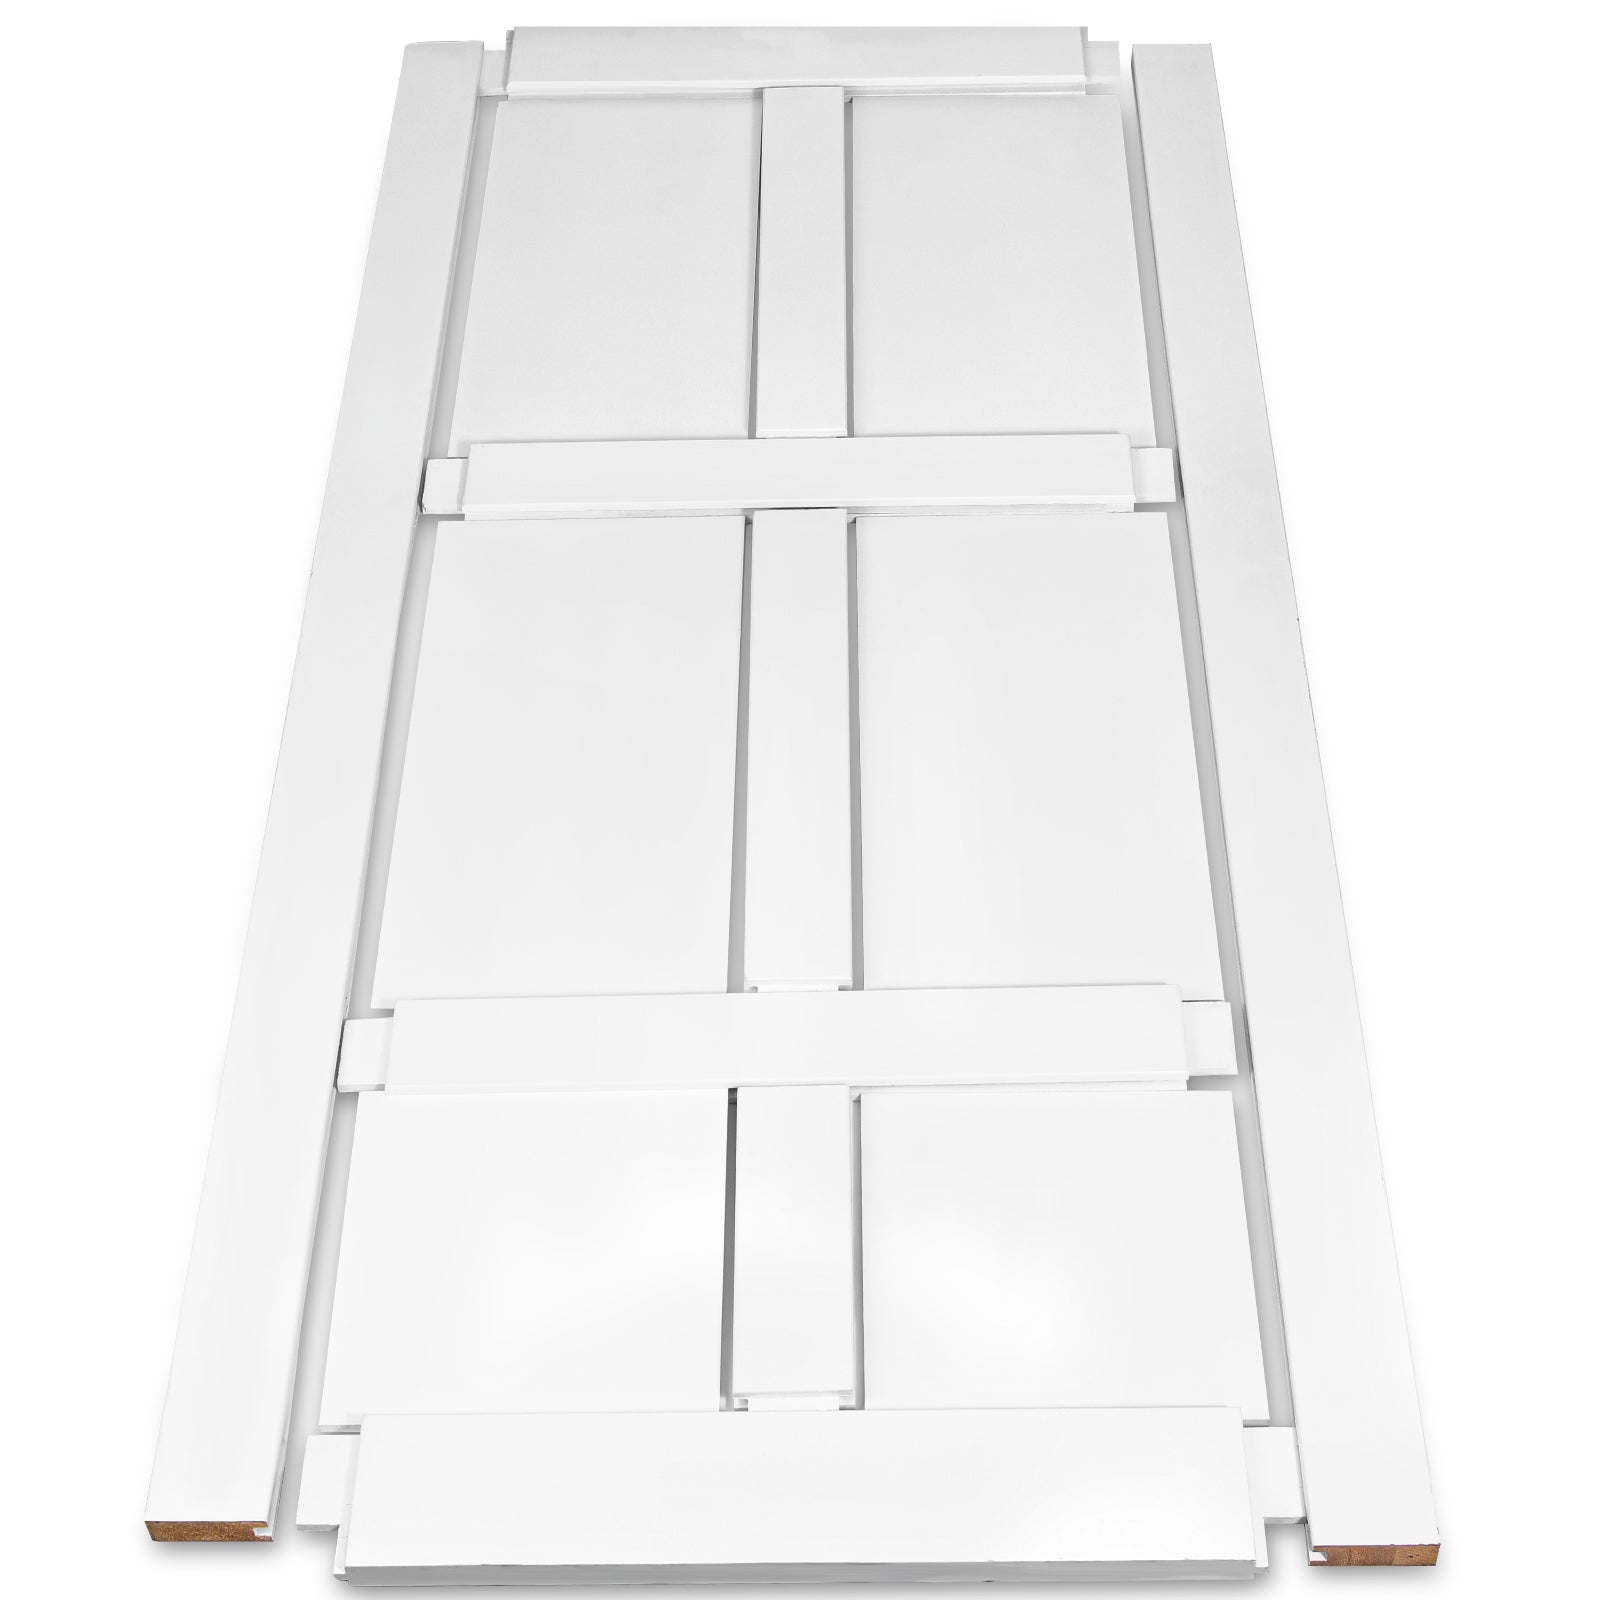 36" x 80" Six Paneled Real Primed Door Slab + 6.6FT Barn Door Sliding Hardware + Adjustable Floor Guider + Pull Handle